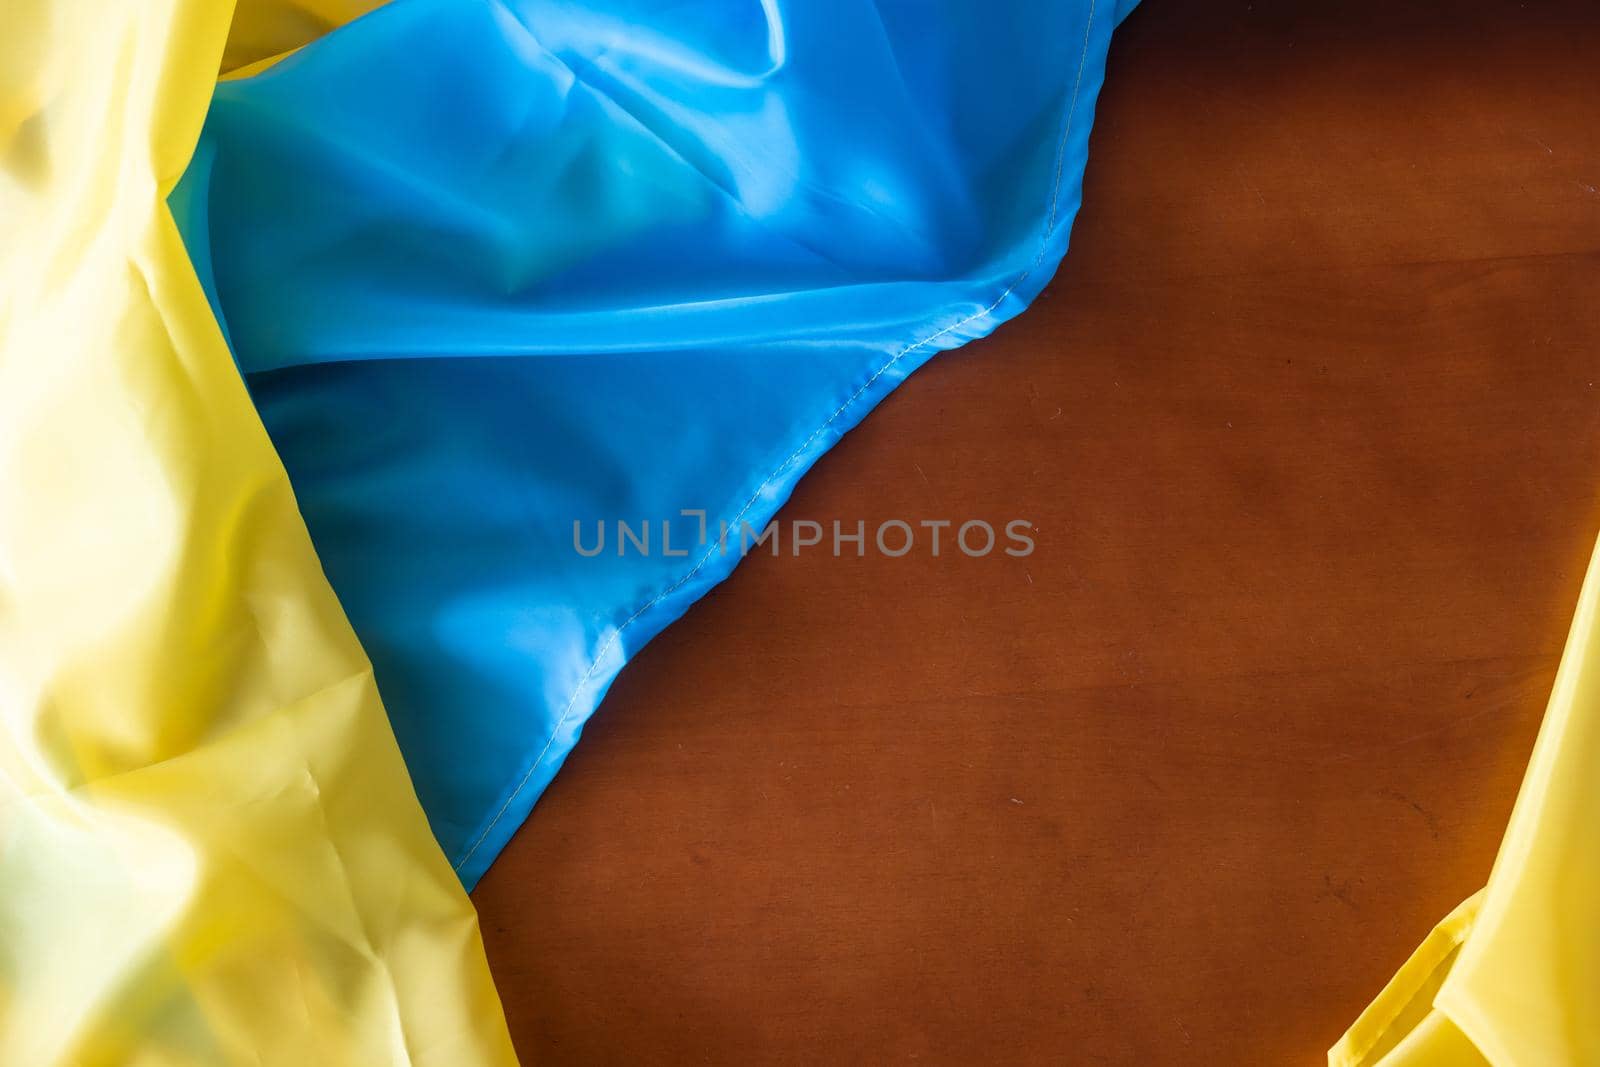 Ukraine flag on wooden table background.